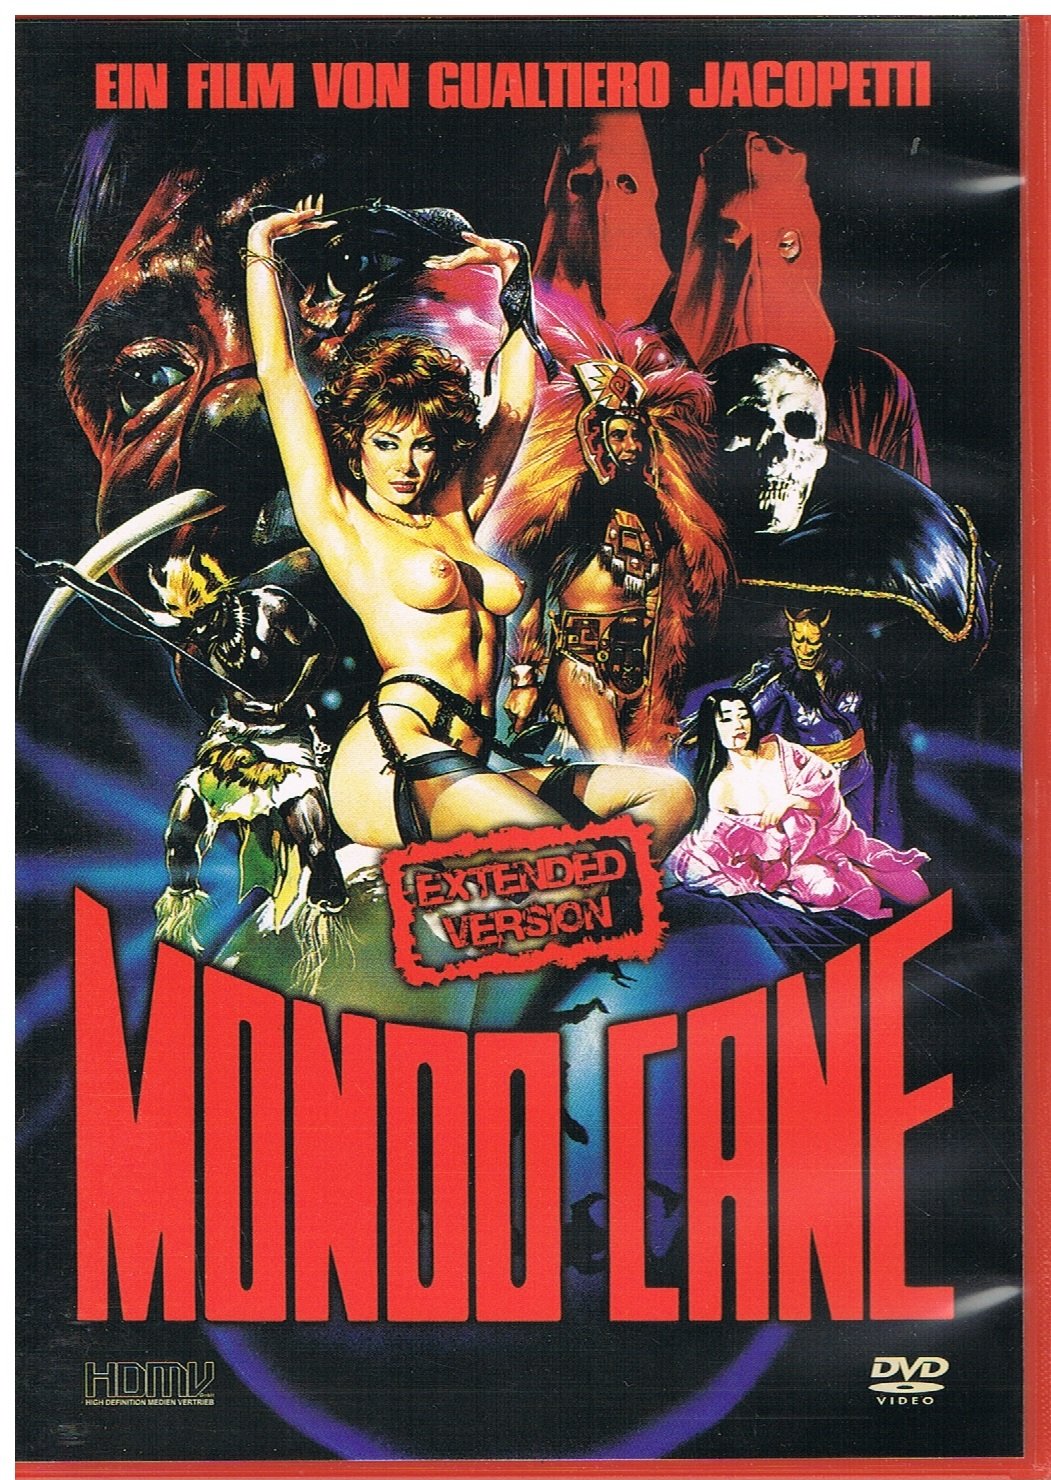 MONDO CANE UNCUT VERSION HDMV [DVD]